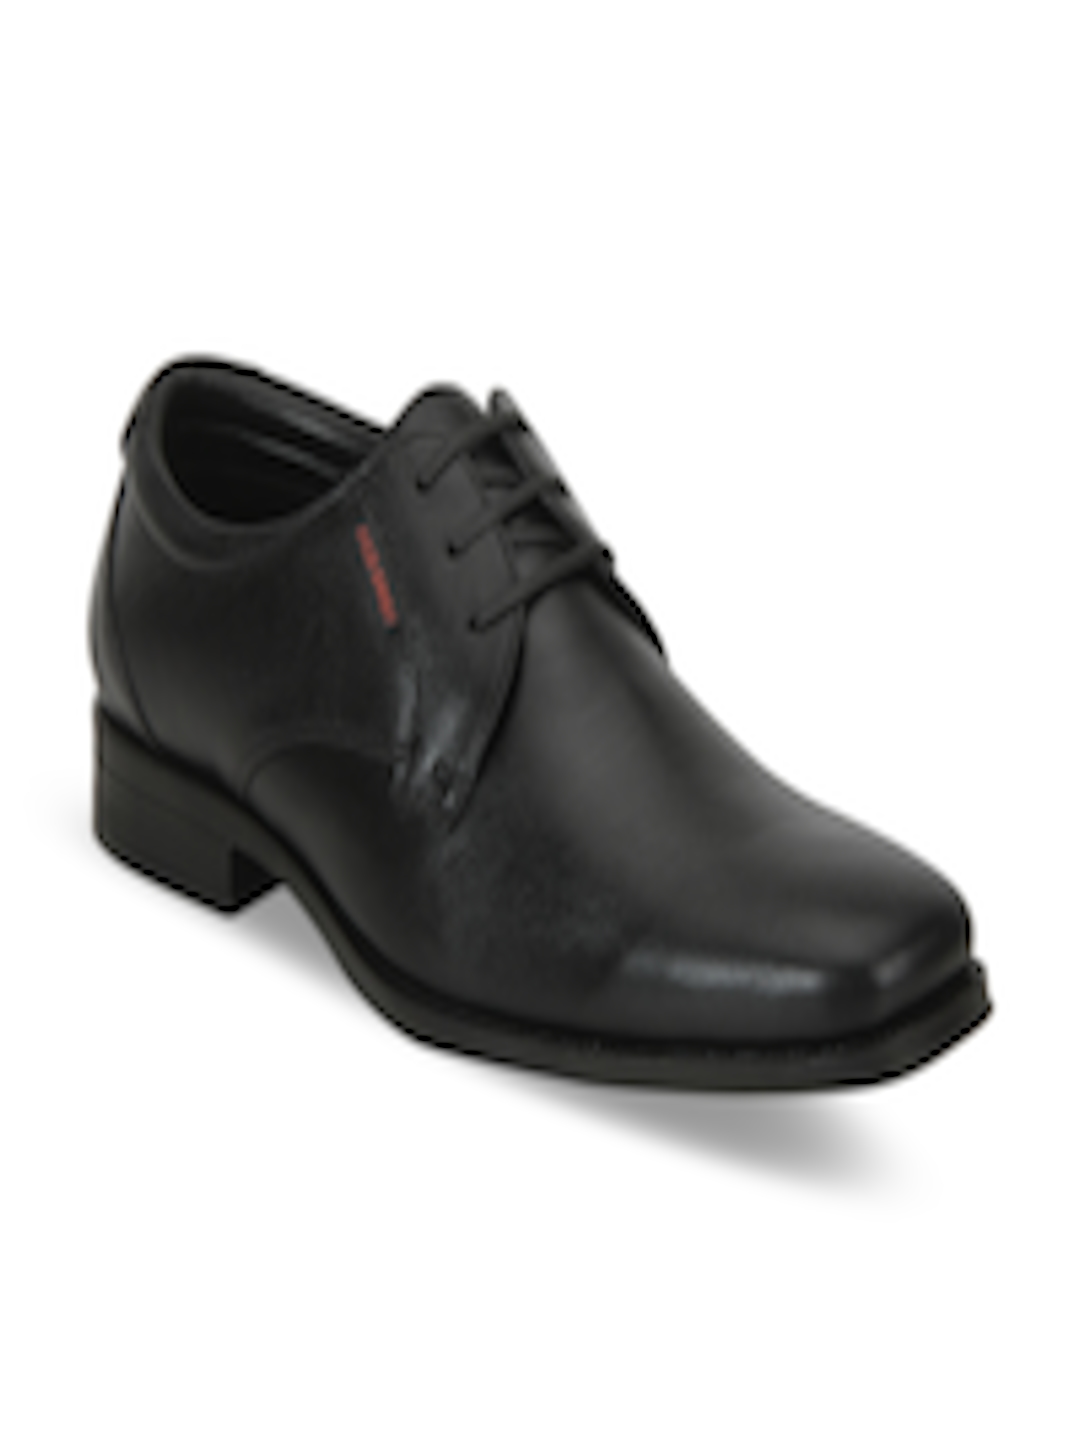 Buy H&M Men Black Solid Formal Derby Shoes on Myntra | PaisaWapas.com